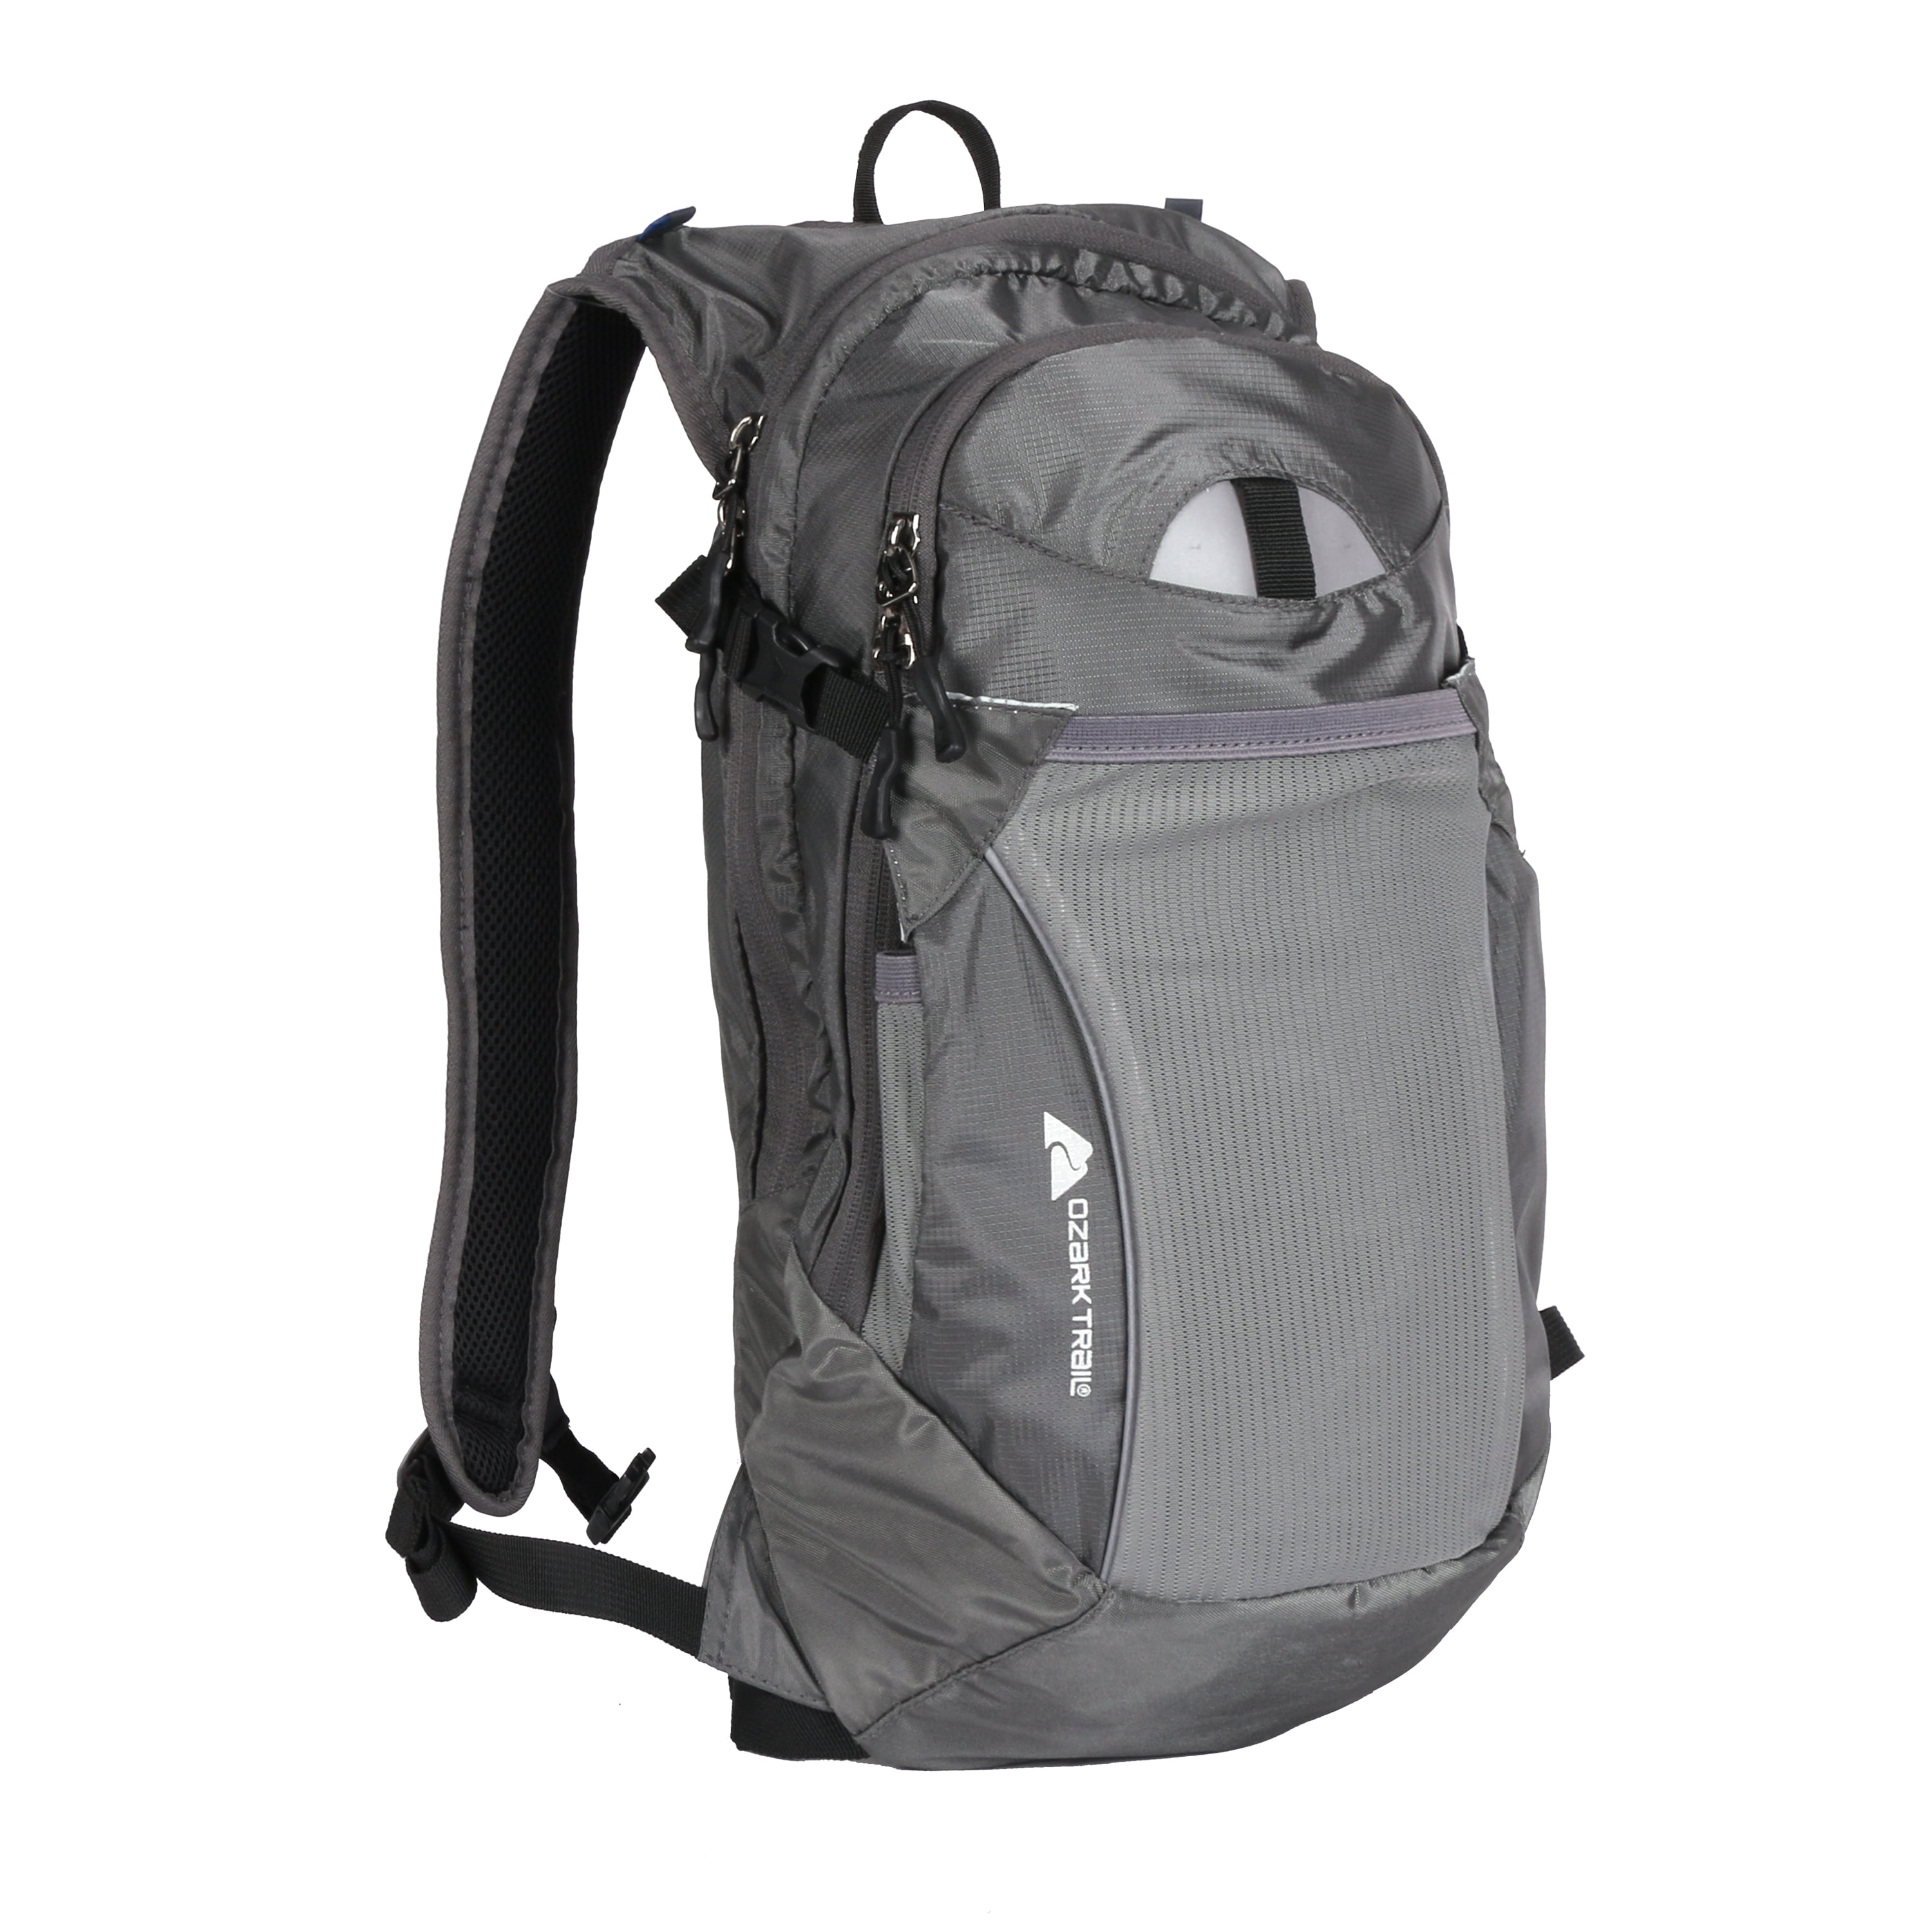 Ozark Trail 17 ltr, Backpacking Backpack, Gray - Walmart.com